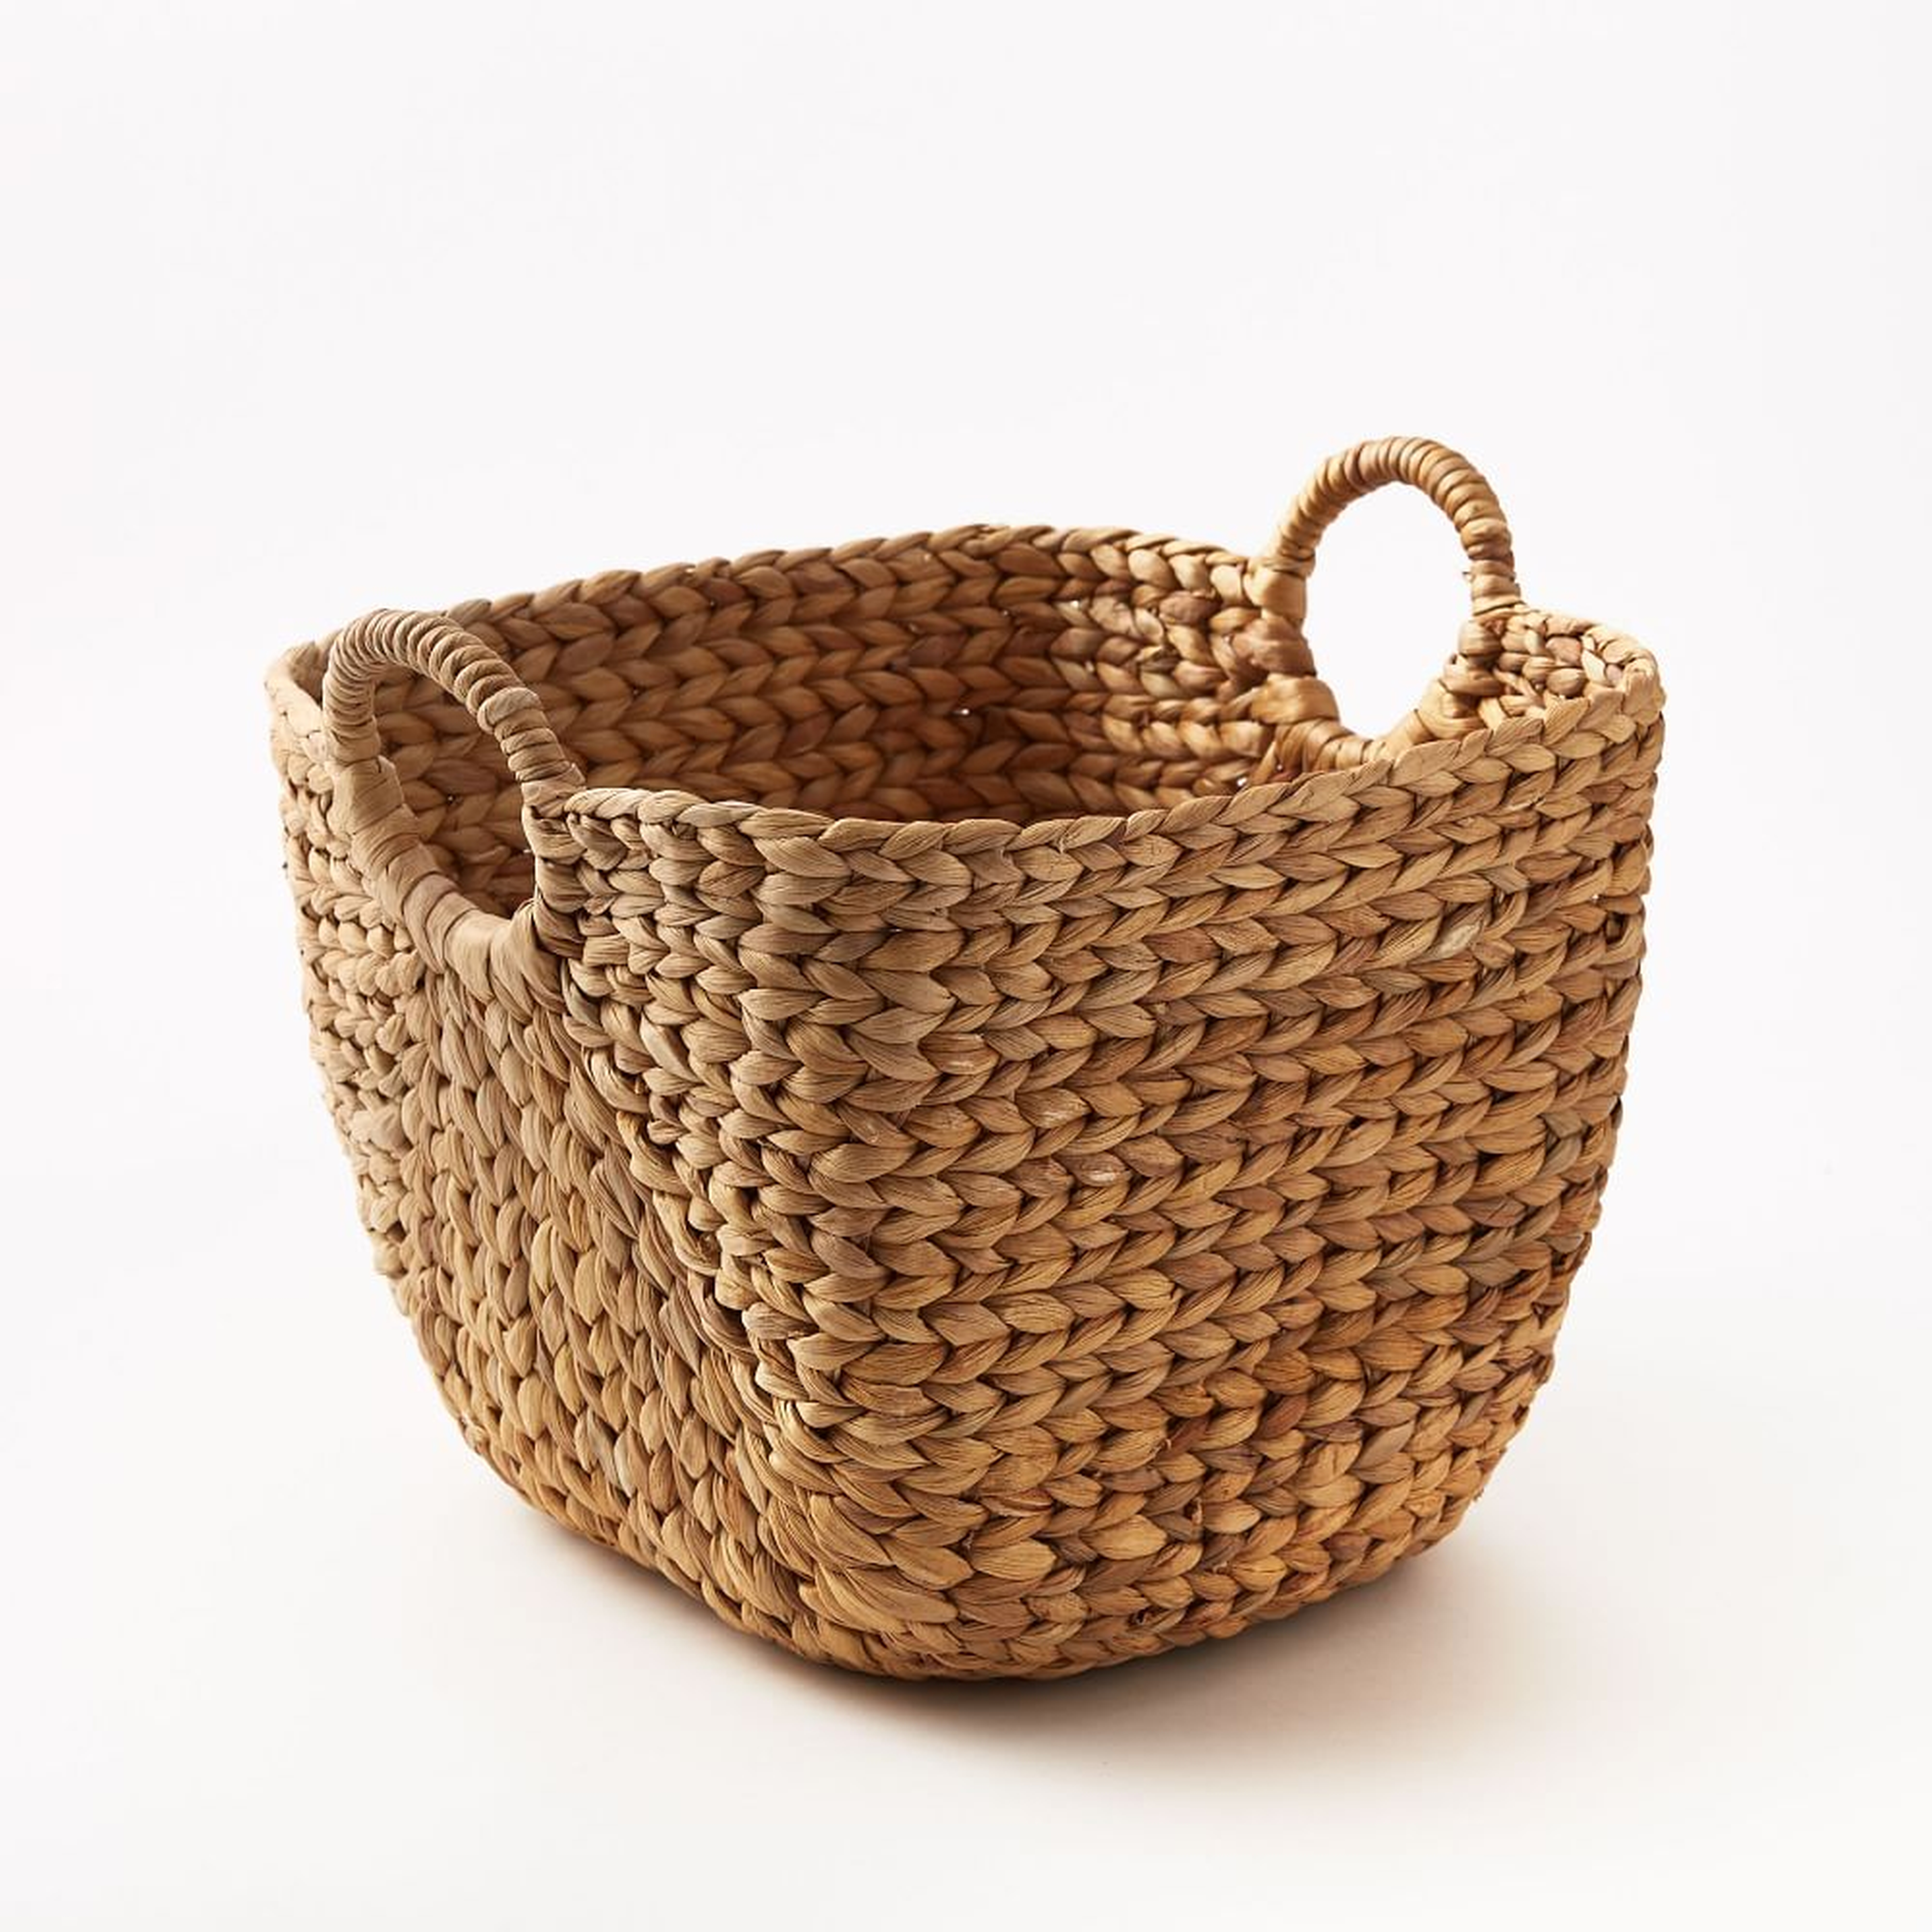 Curved Seagrass Basket, Handle Baskets, Natural, Medium, 12"W x 13.25"D x 11.25"H - West Elm